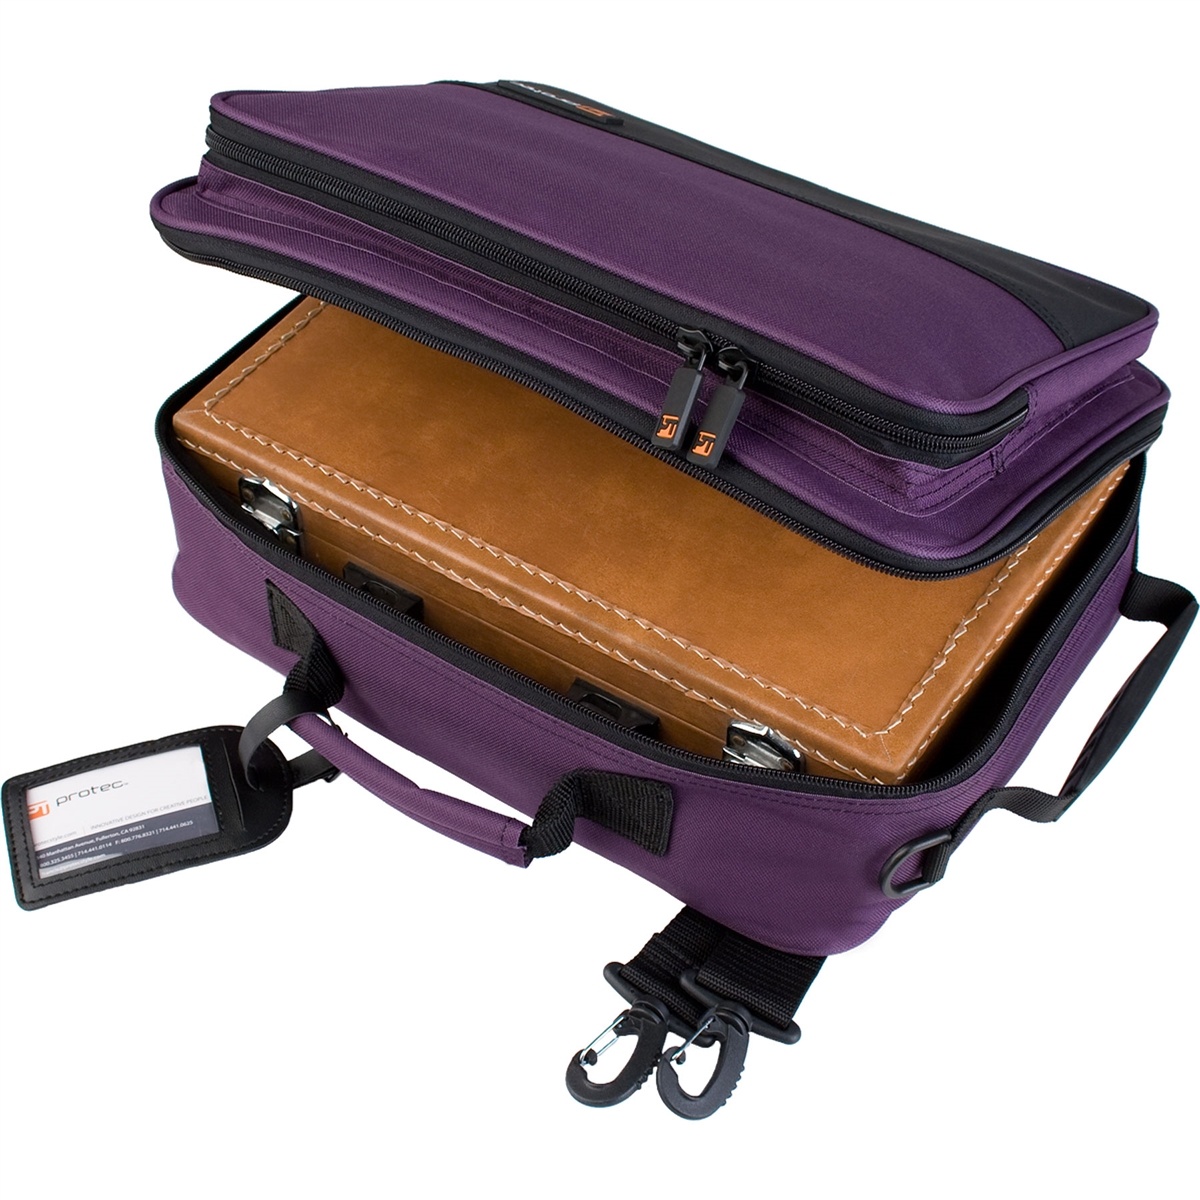 Protec Koffer - Klarinette Kofferüberzug - A307PR Violett